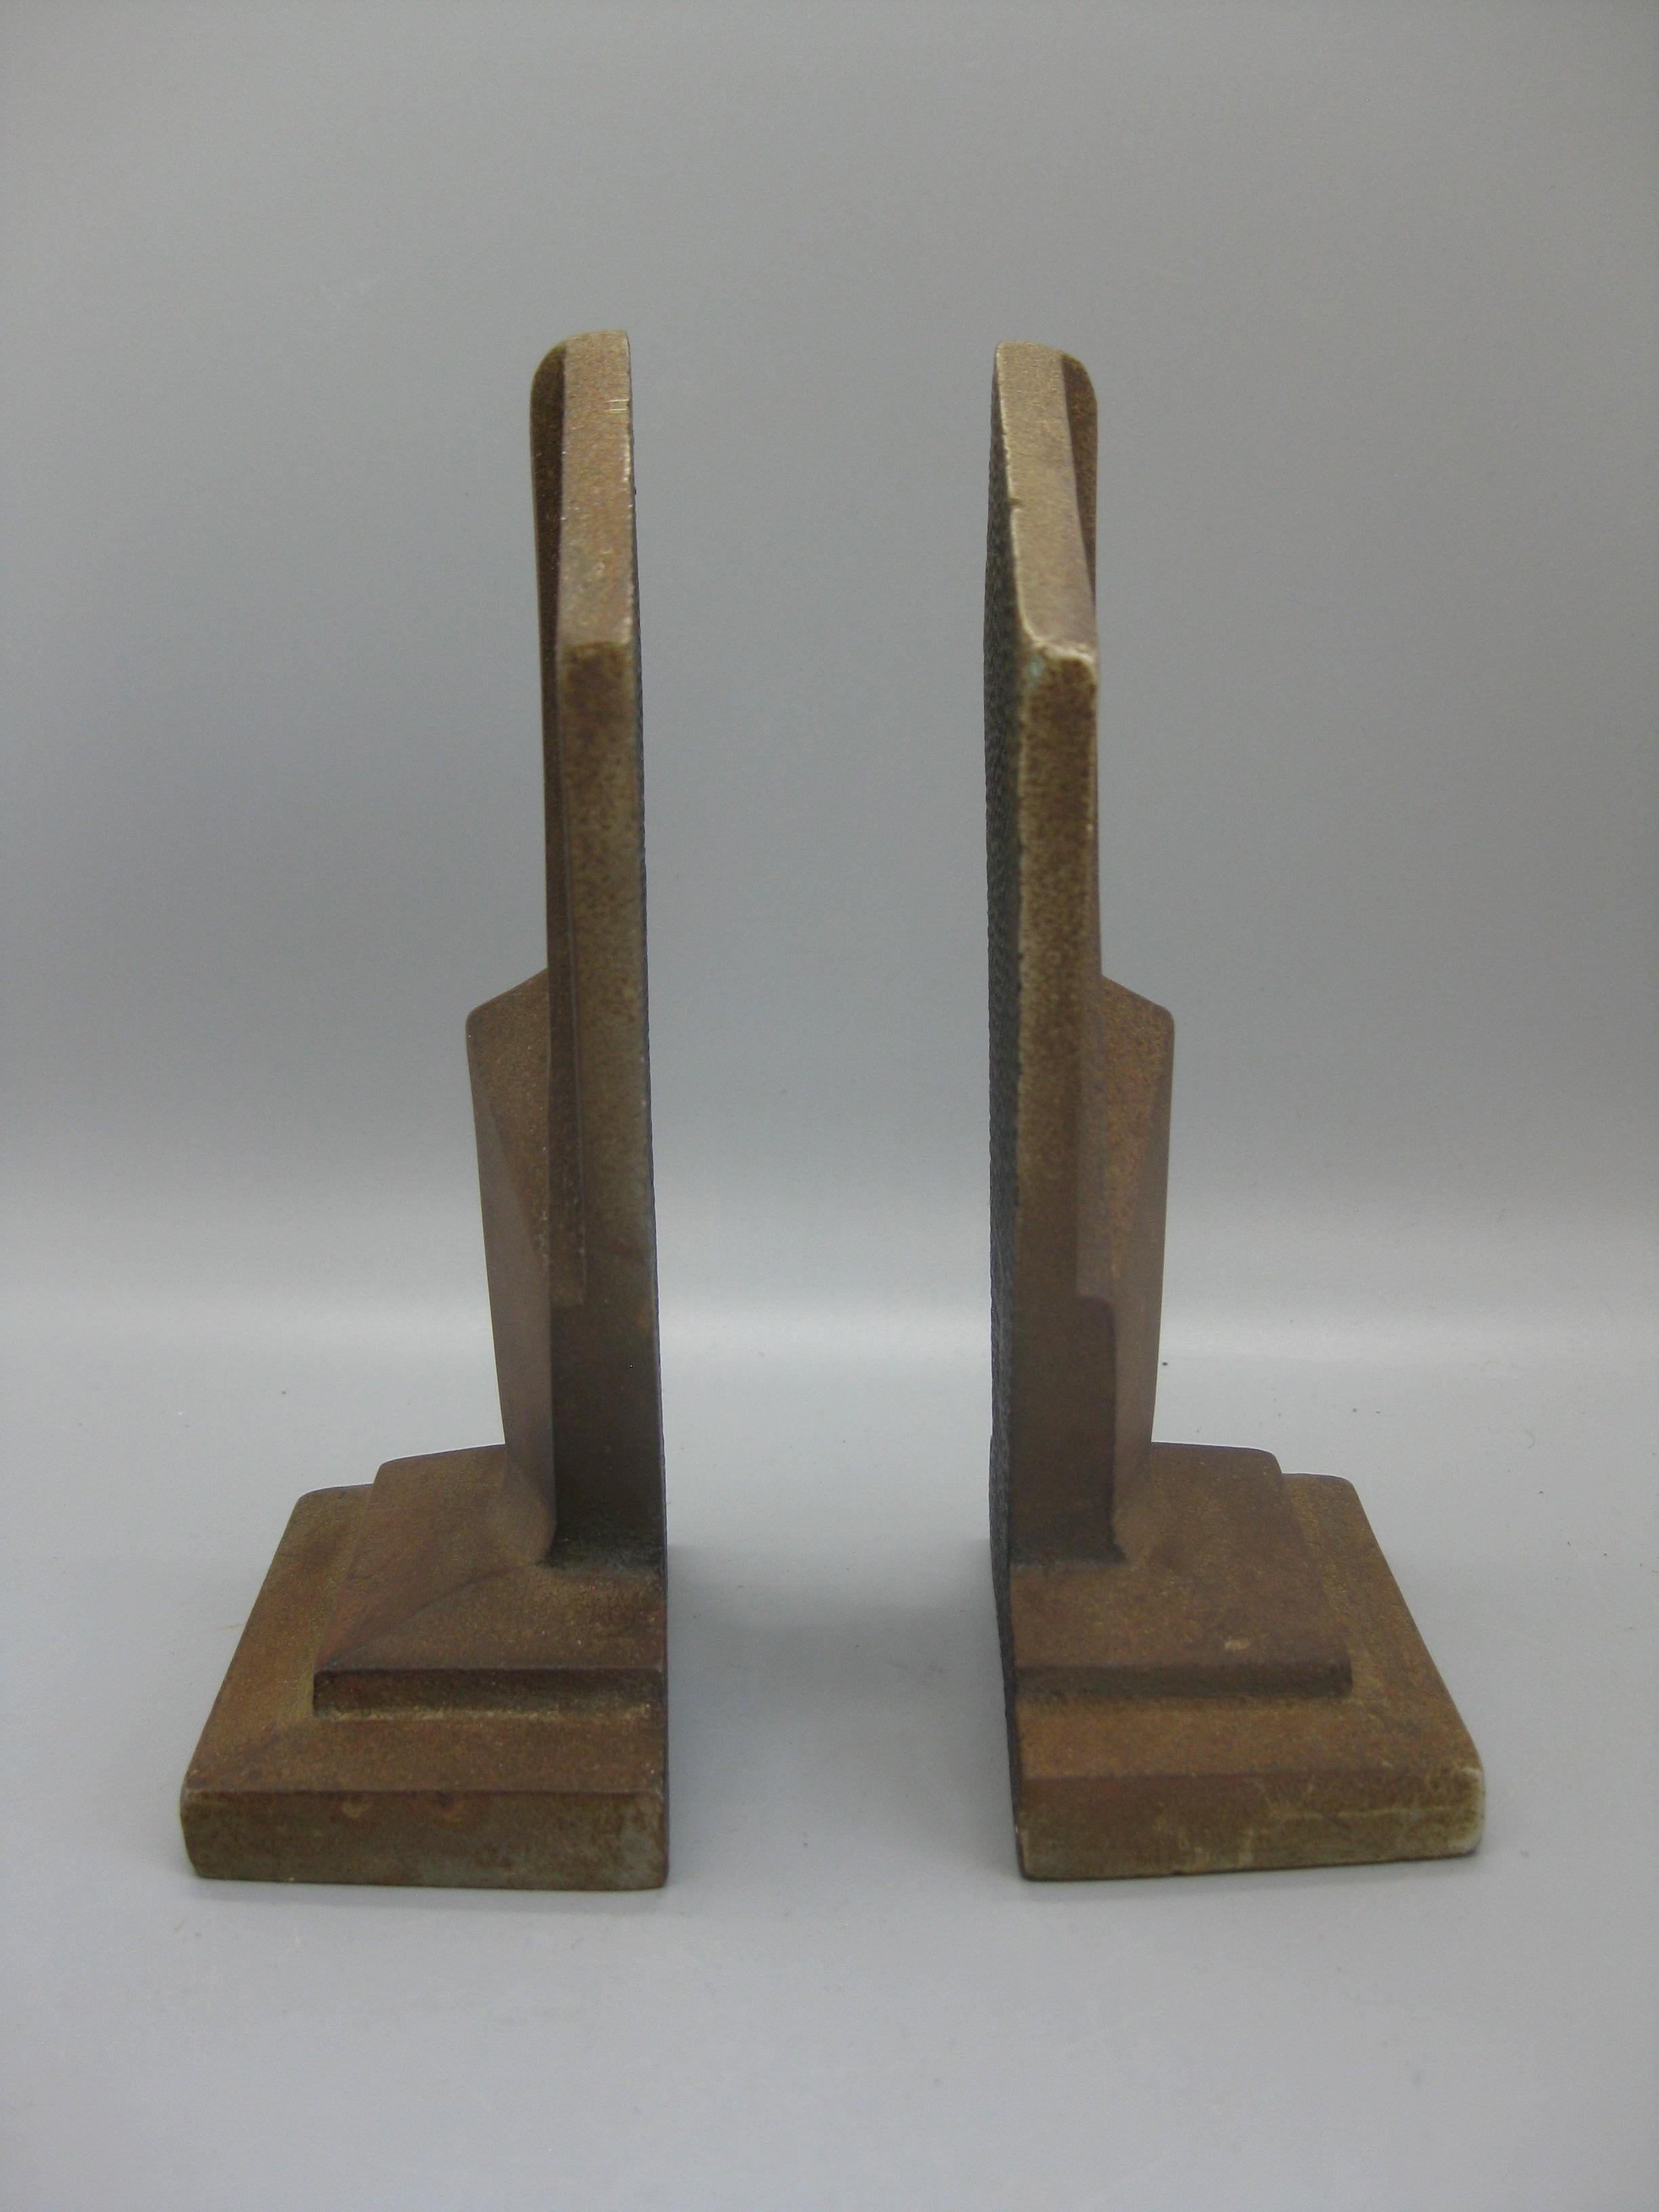 Antique Art Deco Hubley Cast Iron Geometric Skyscraper Sculpture Bookends For Sale 1